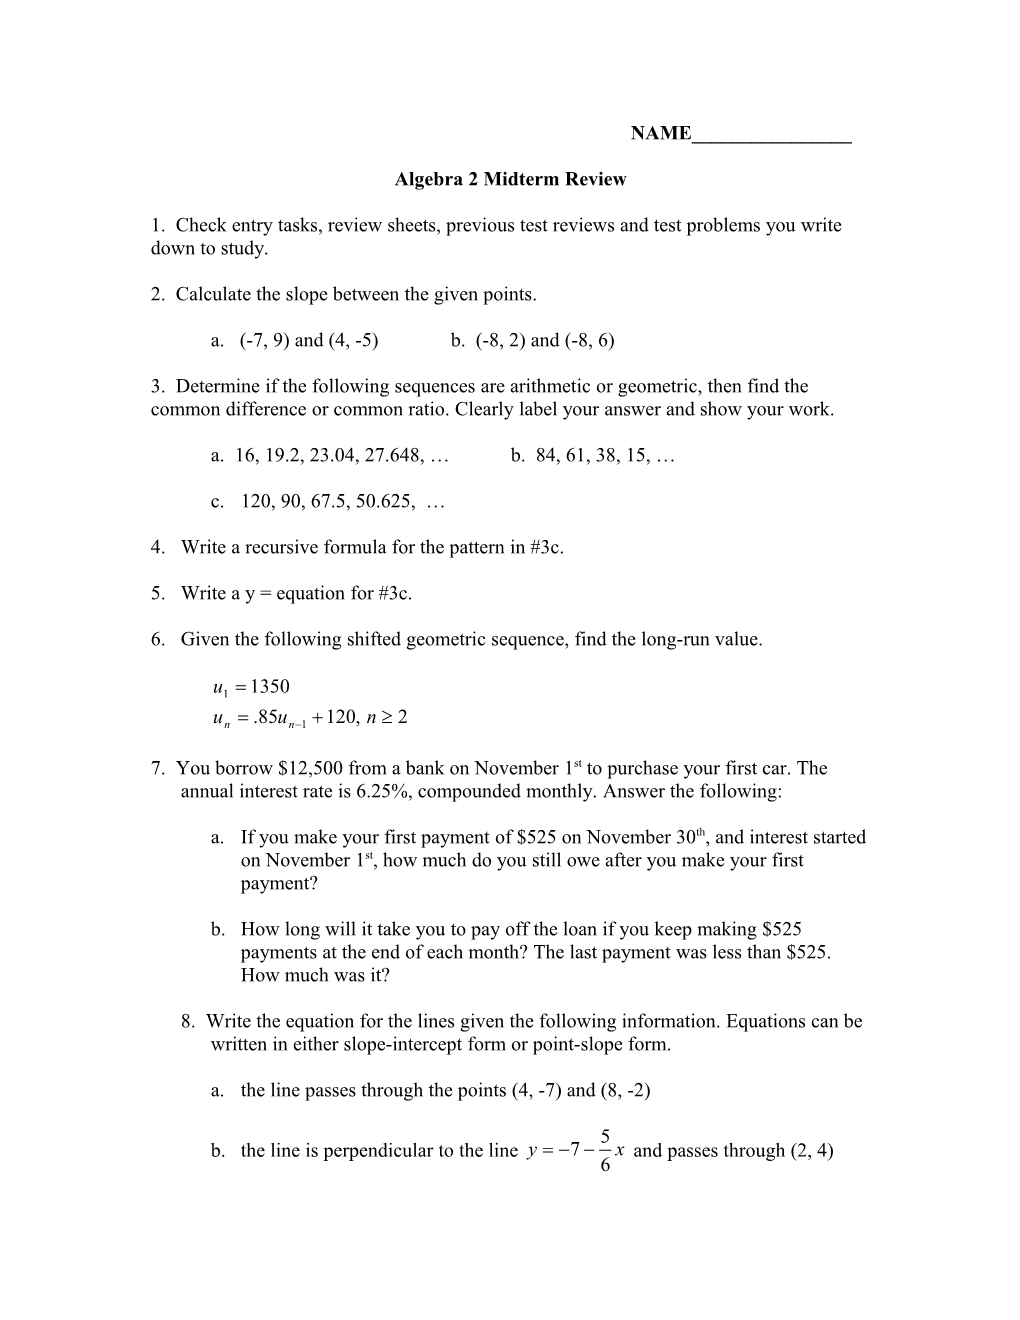 Algebra 2 Midterm Review